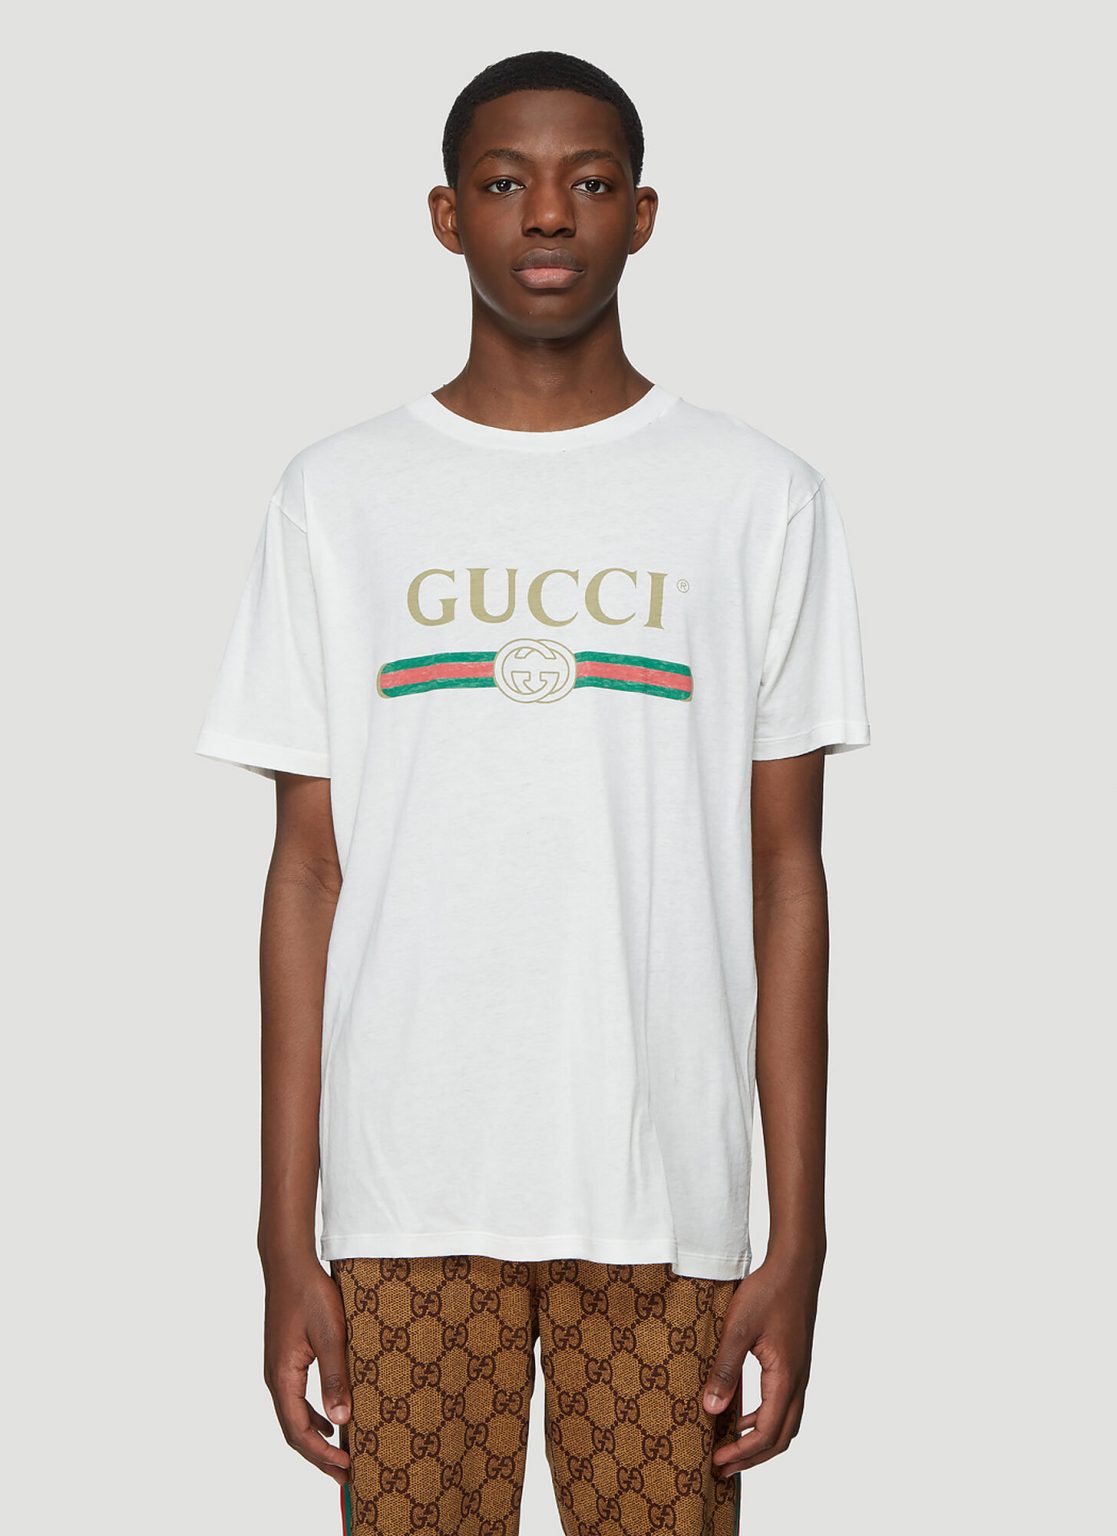 Gucci Logo T-Shirt in White size S | The Fashionisto